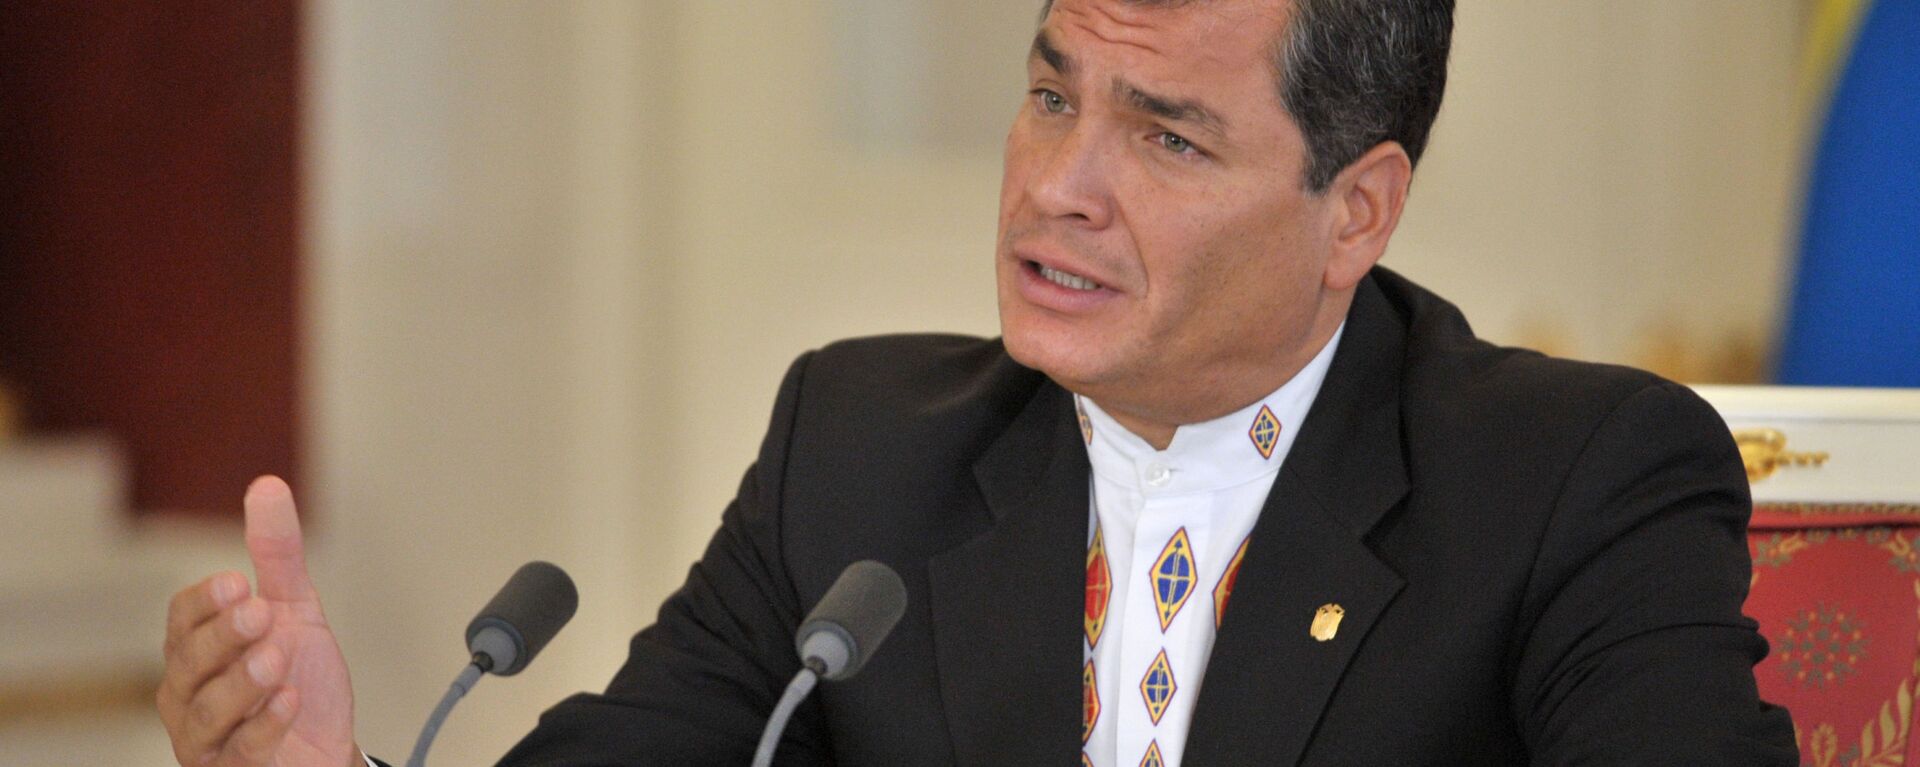 Rafael Correa, expresidente de Ecuador - Sputnik Mundo, 1920, 18.08.2021